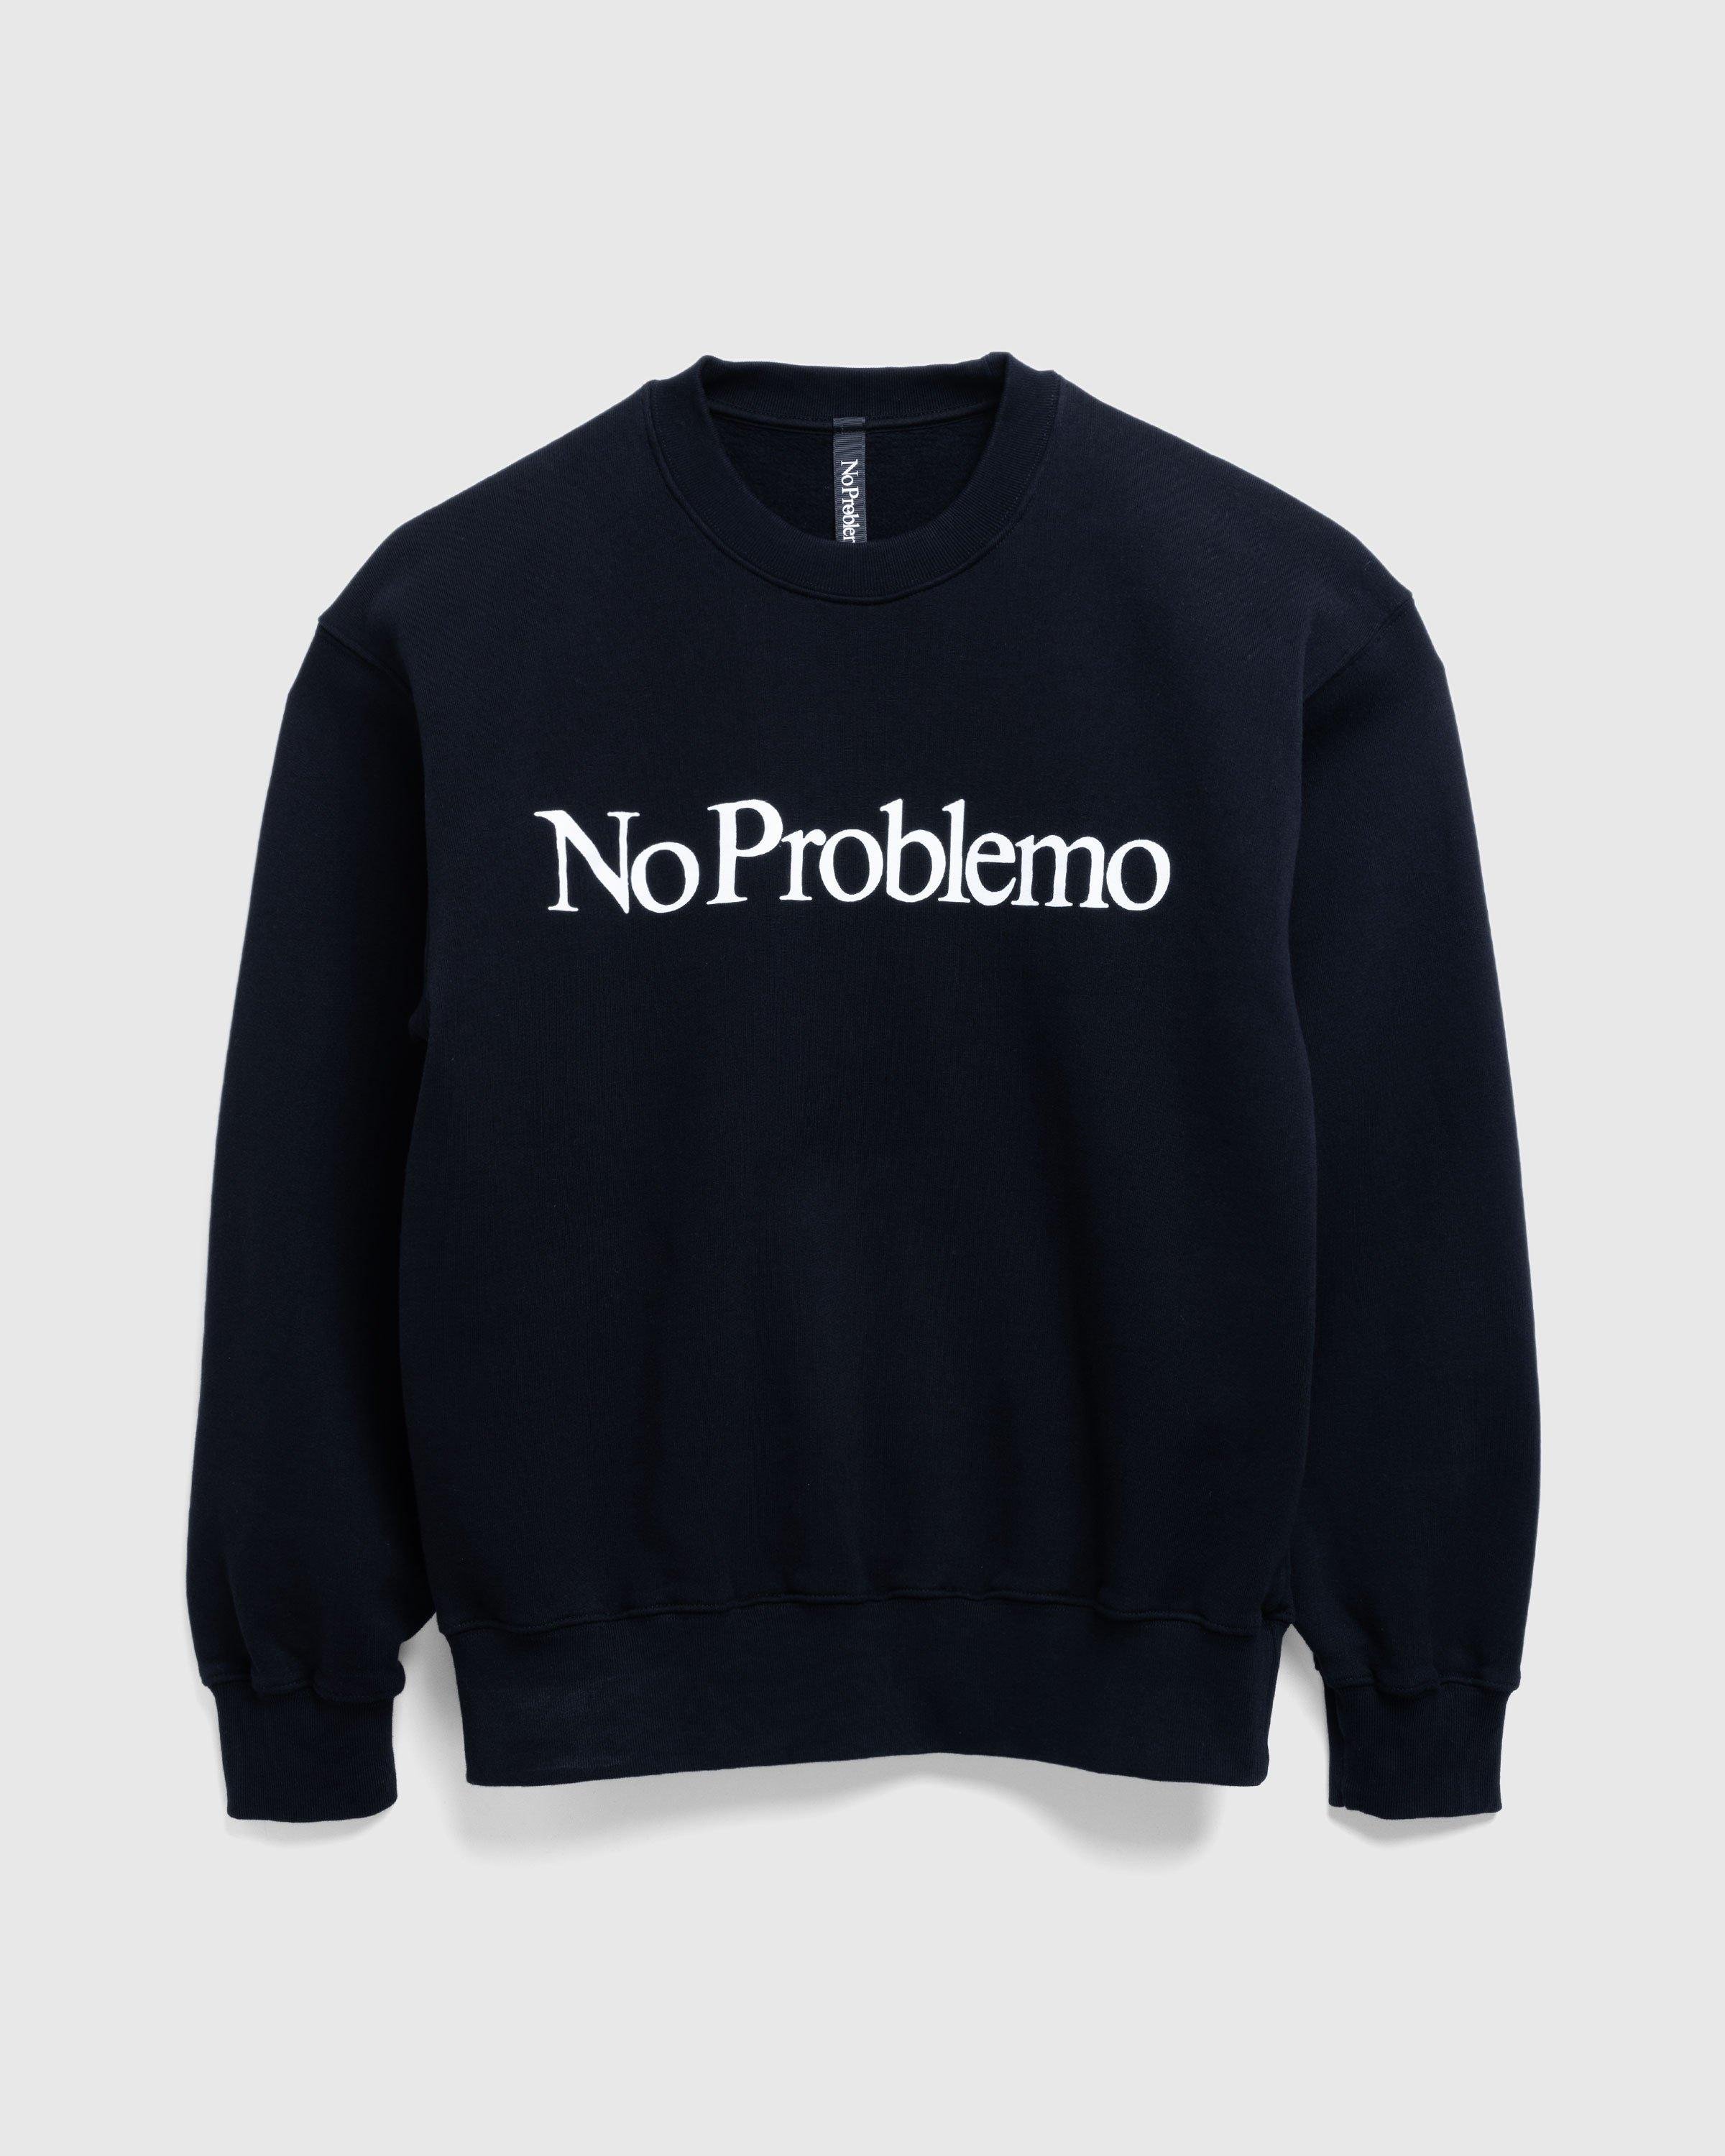 AriesNo Problemo Sweatshirt Black by HIGHSNOBIETY